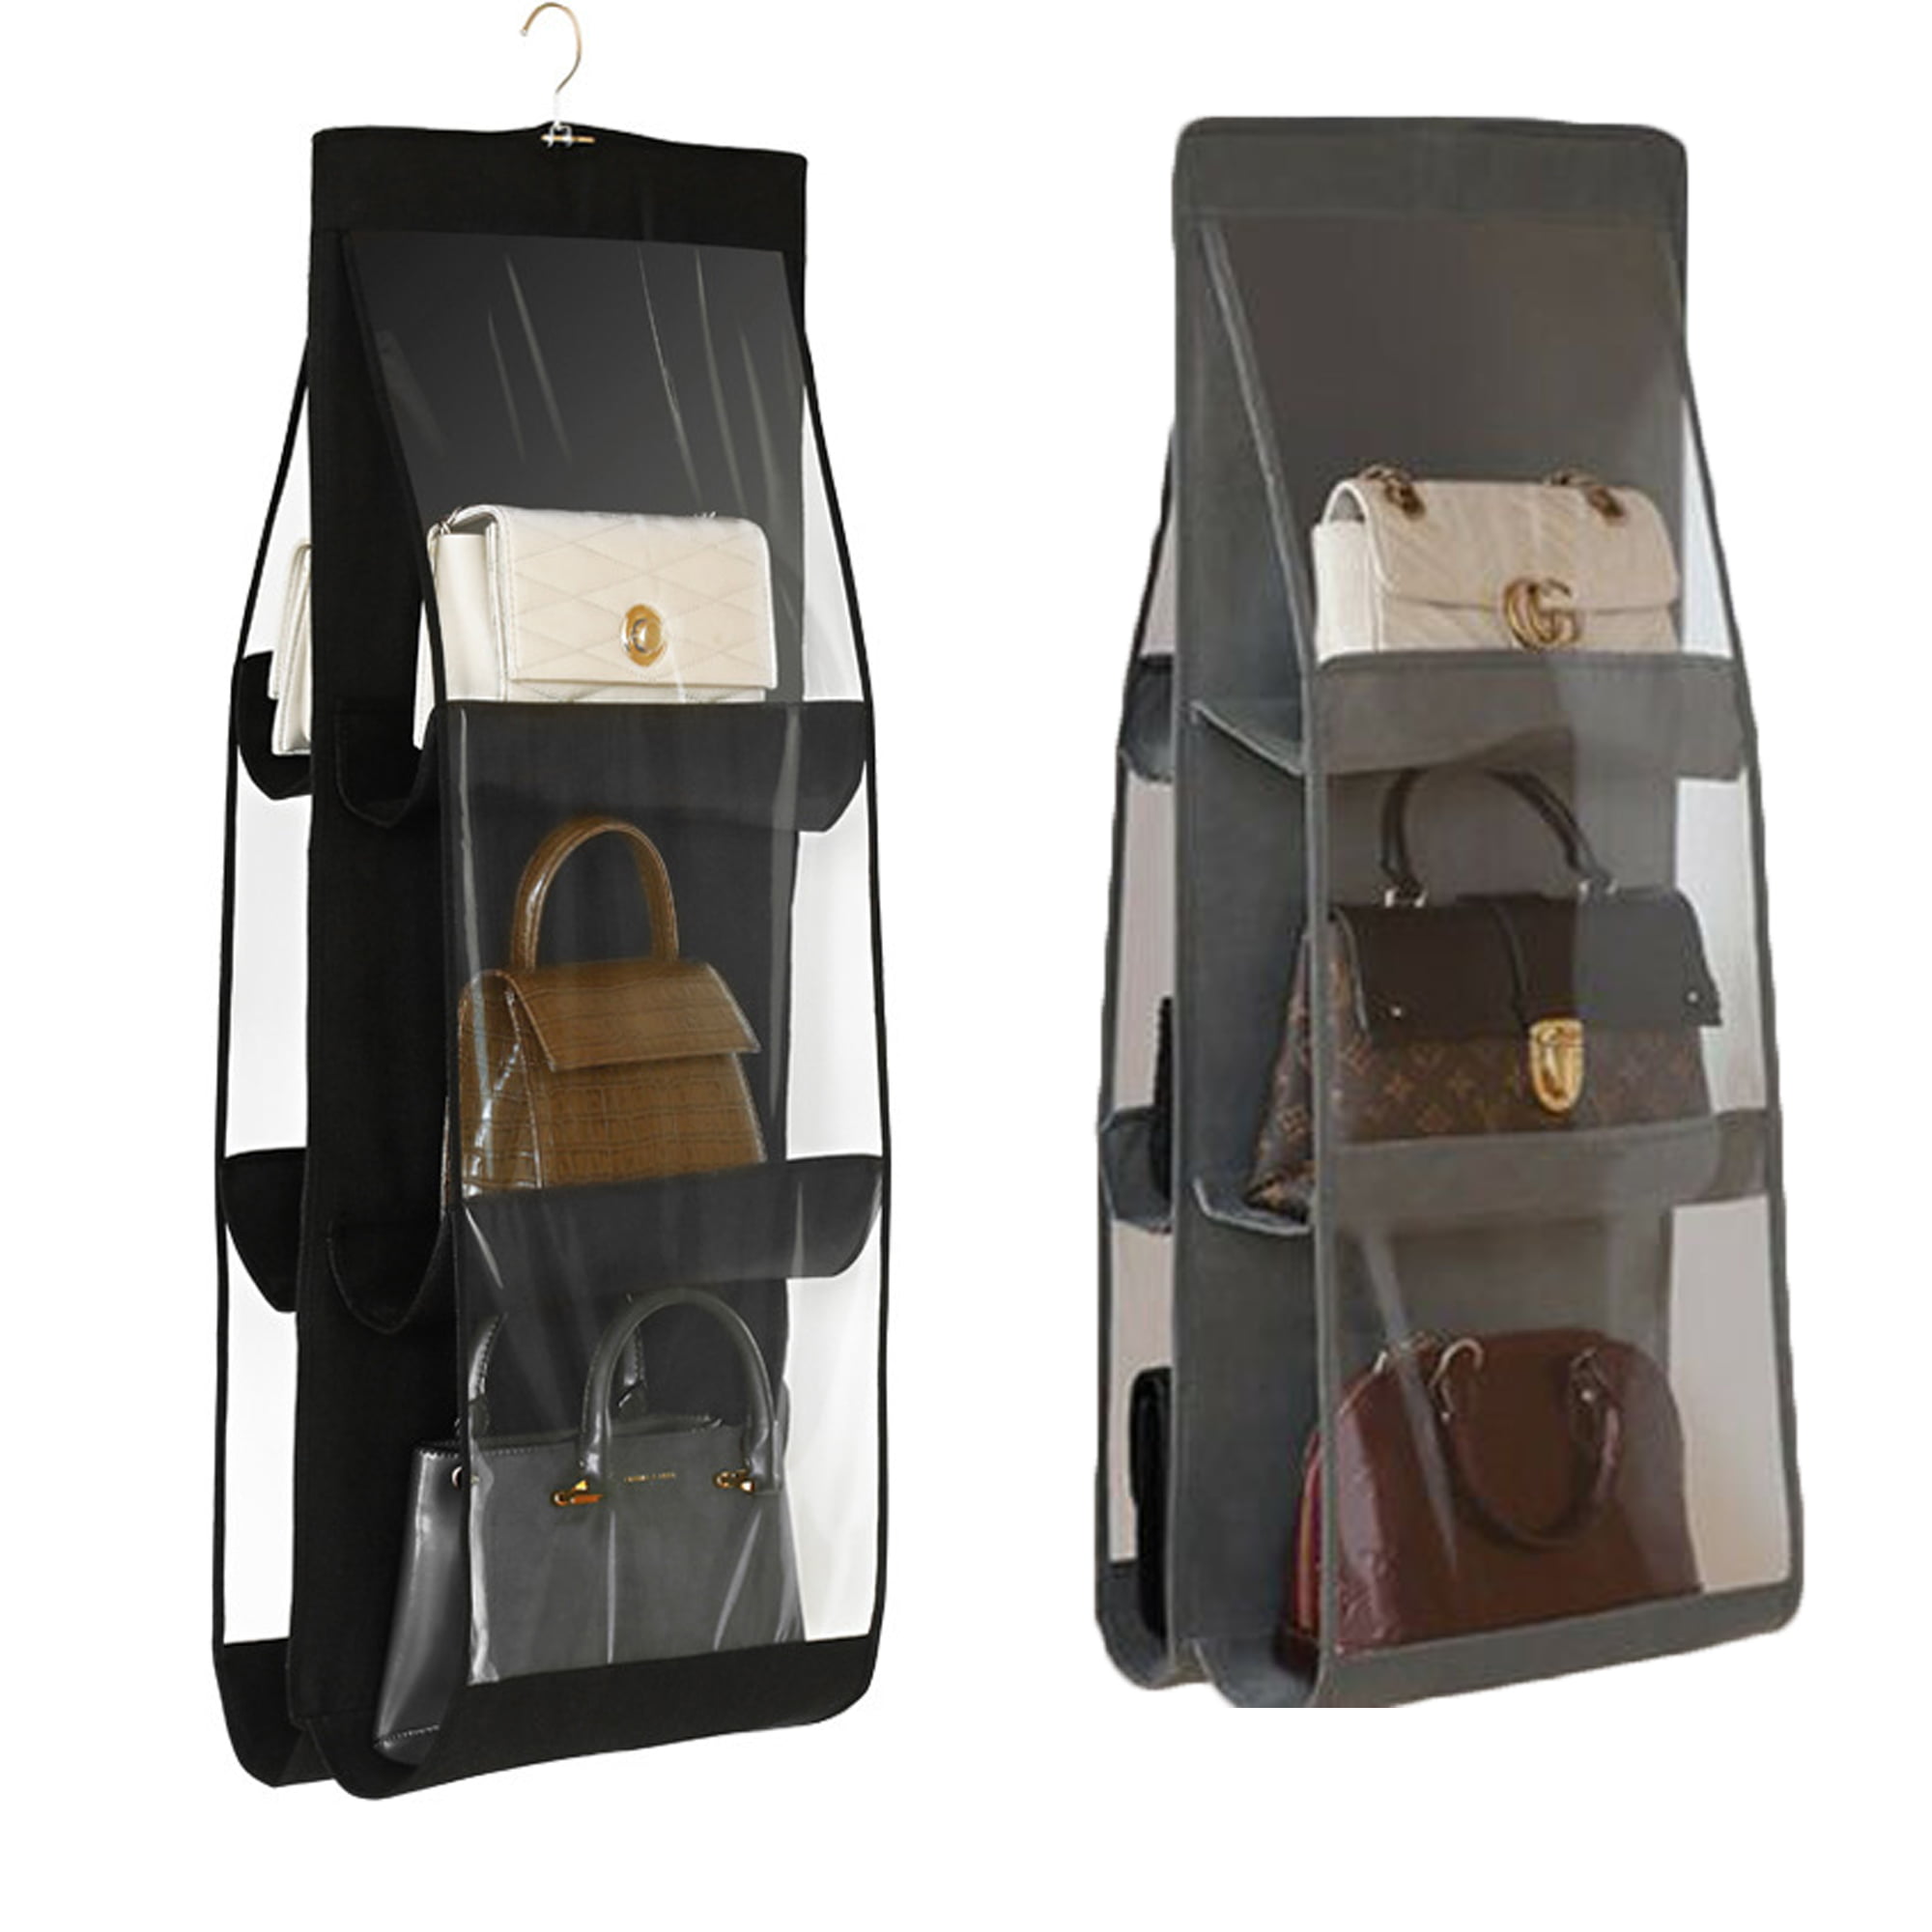 Hanging Handbag Organizer 6 Pocket Shelf Bag Storage Holder Wardrobe Closets - 0 ...